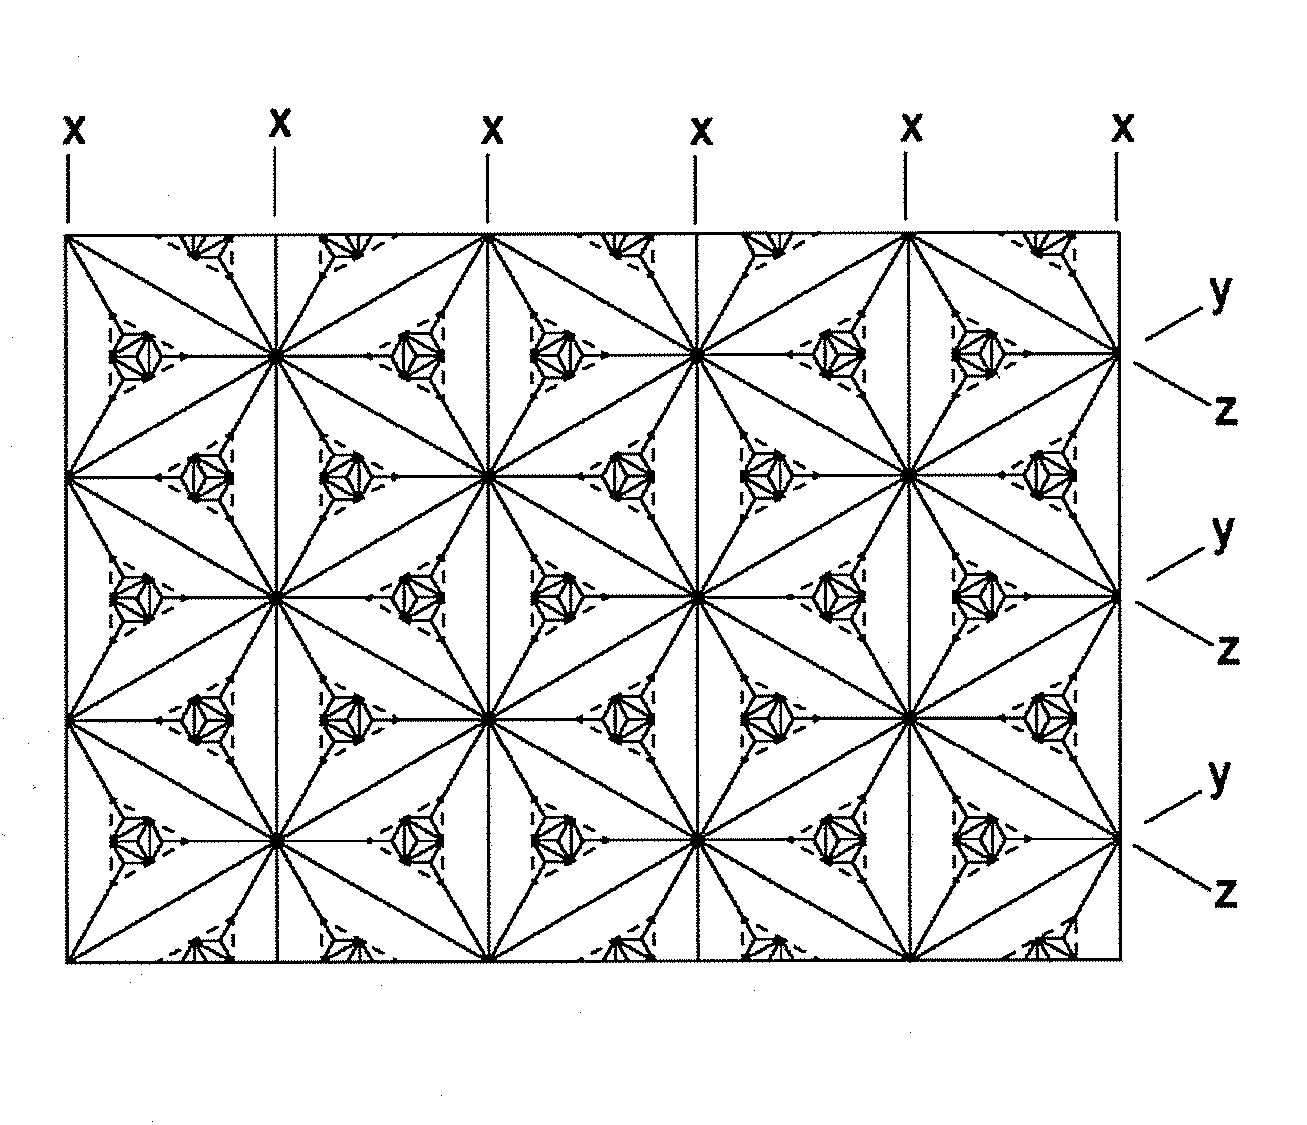 Composite Triangular-Pyramidal Cube-Corner Retroreflective Sheeting And Retroreflective Articles